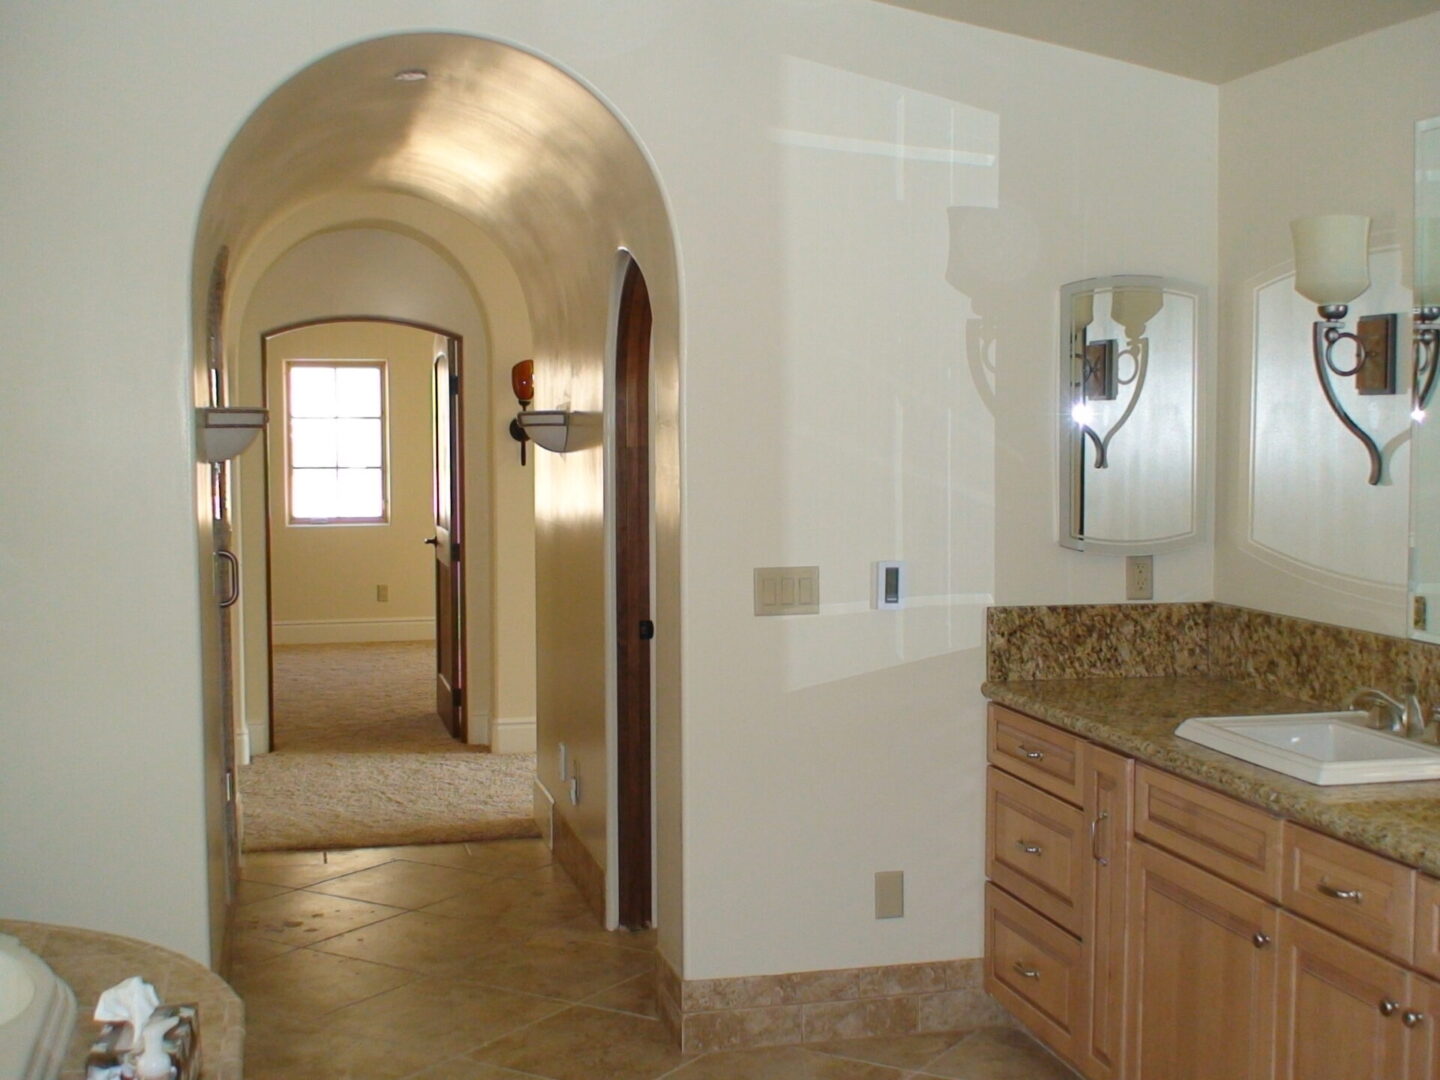 Closeup interior view of the wash basin